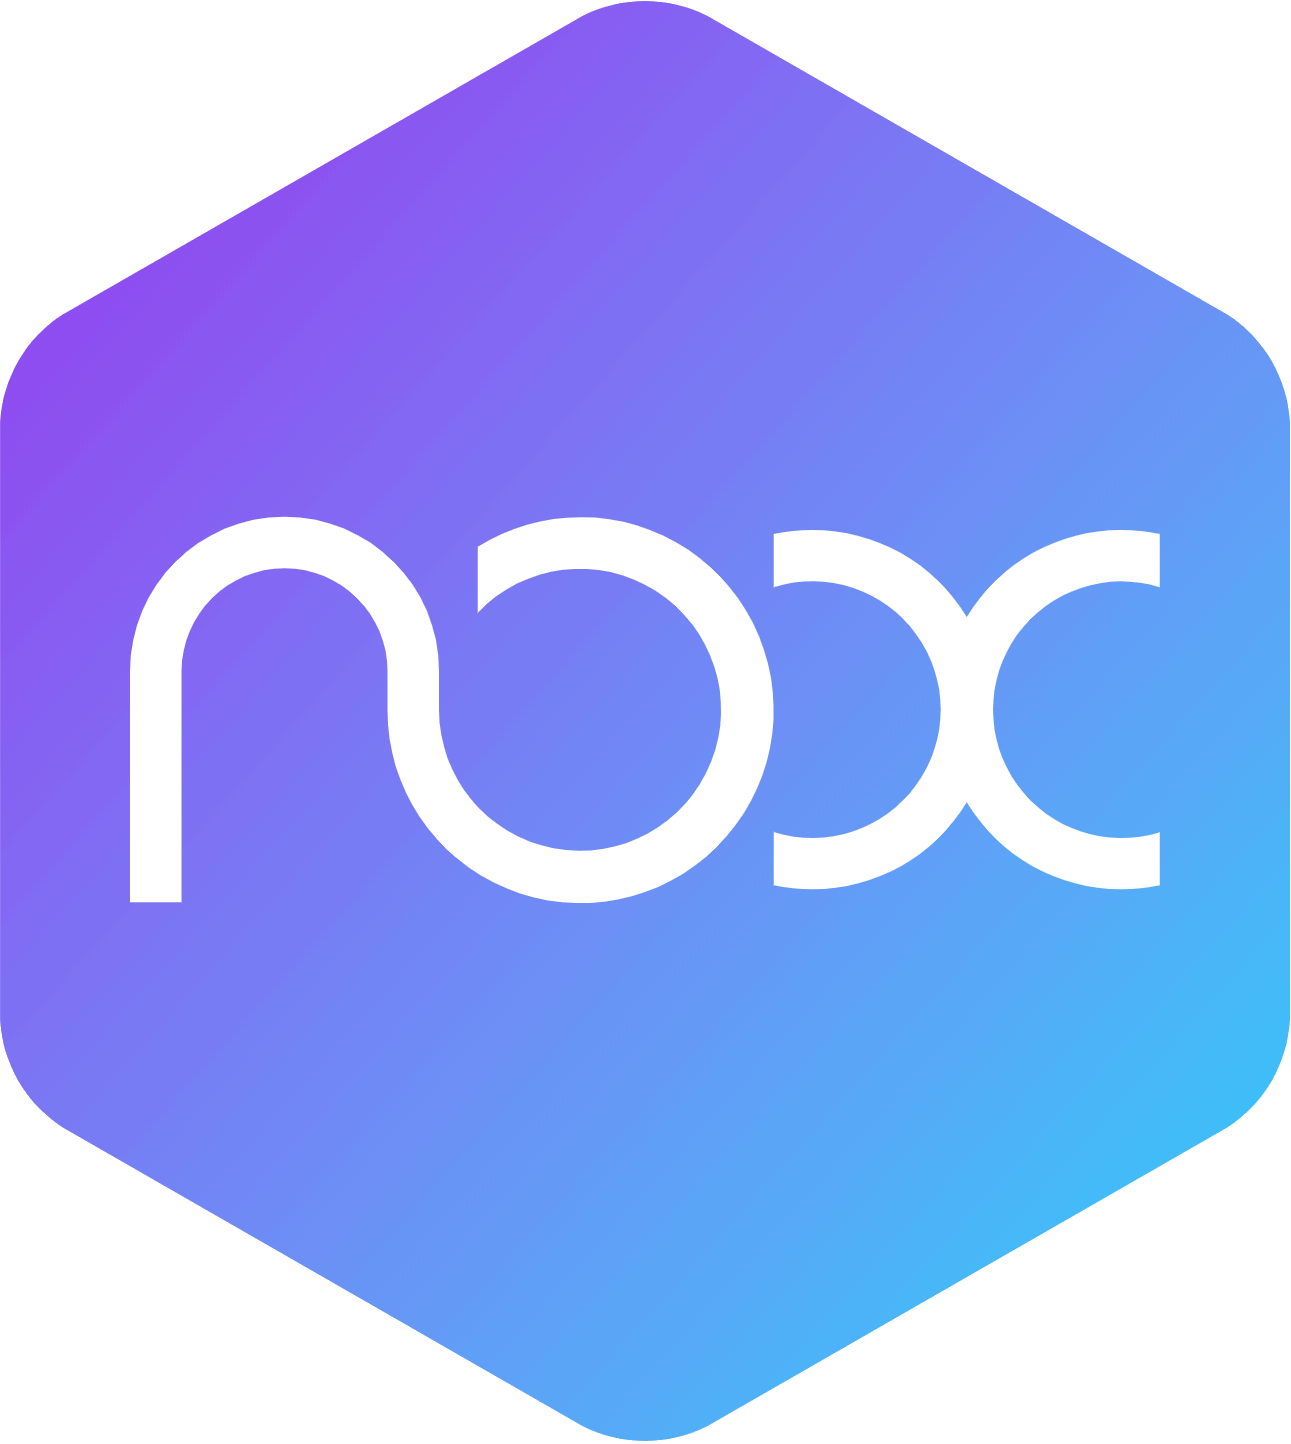 download nox emulator for mac